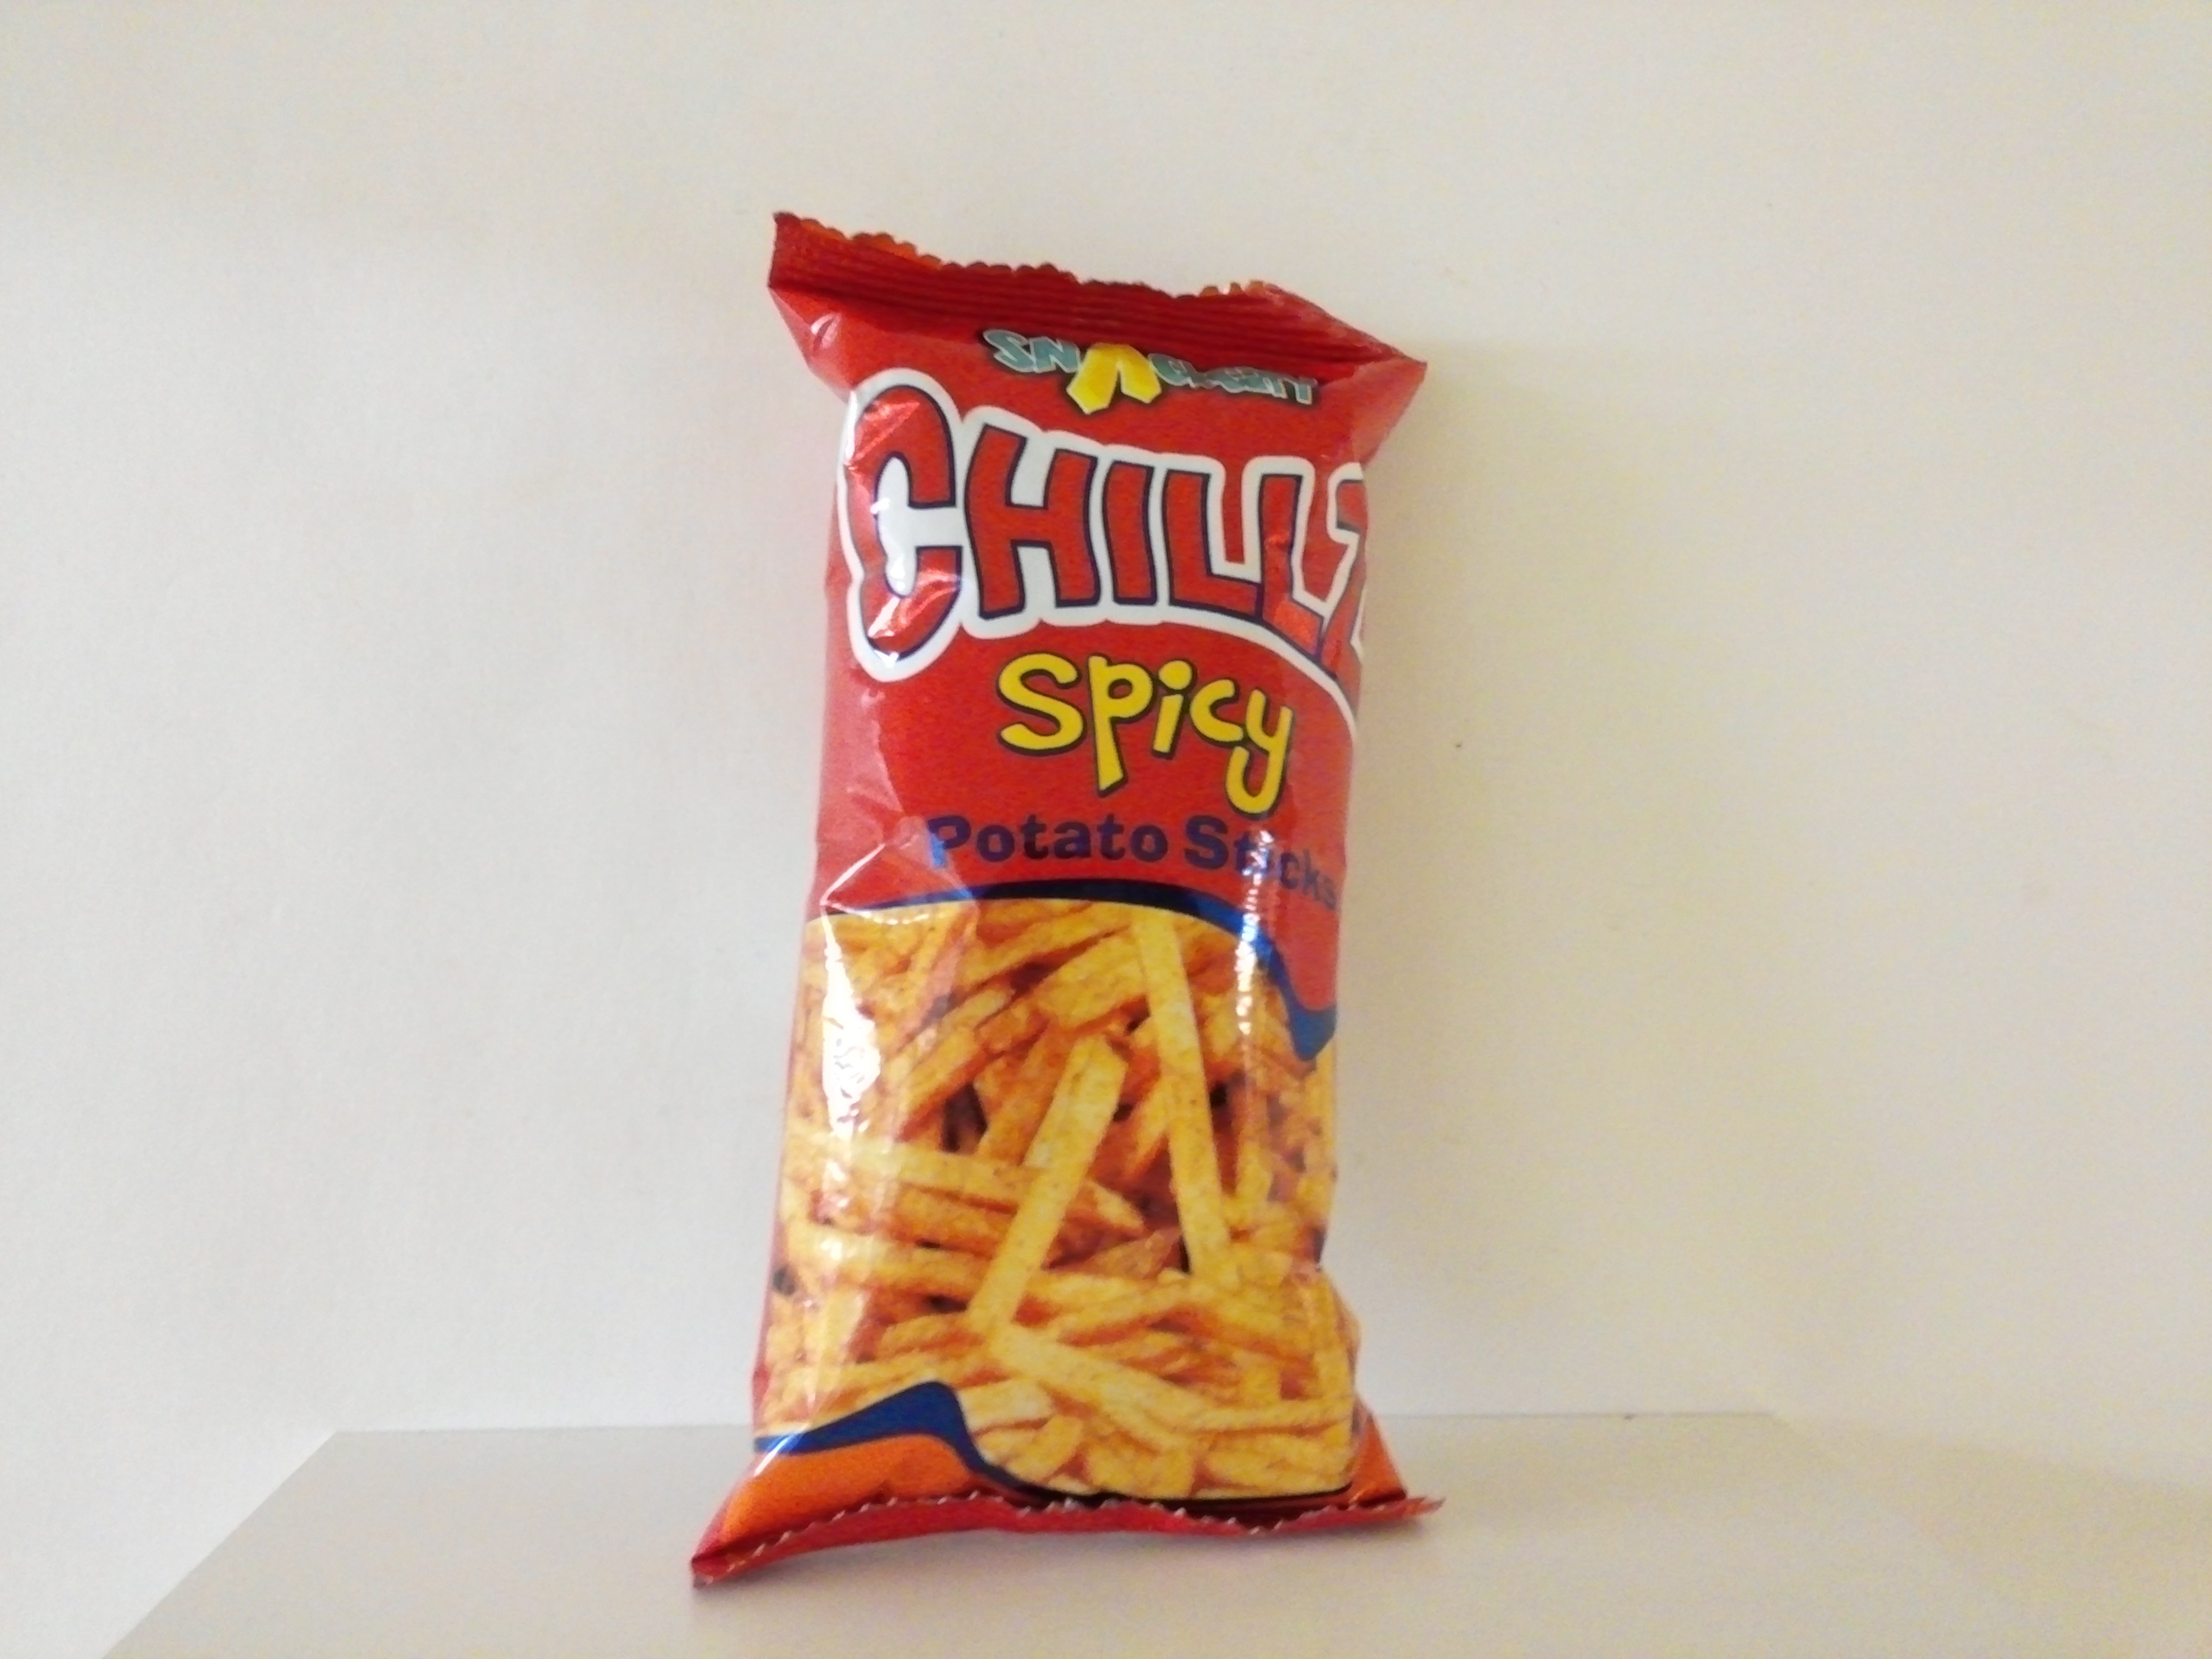 Chillz Spicy Potato Sticks 25 gms